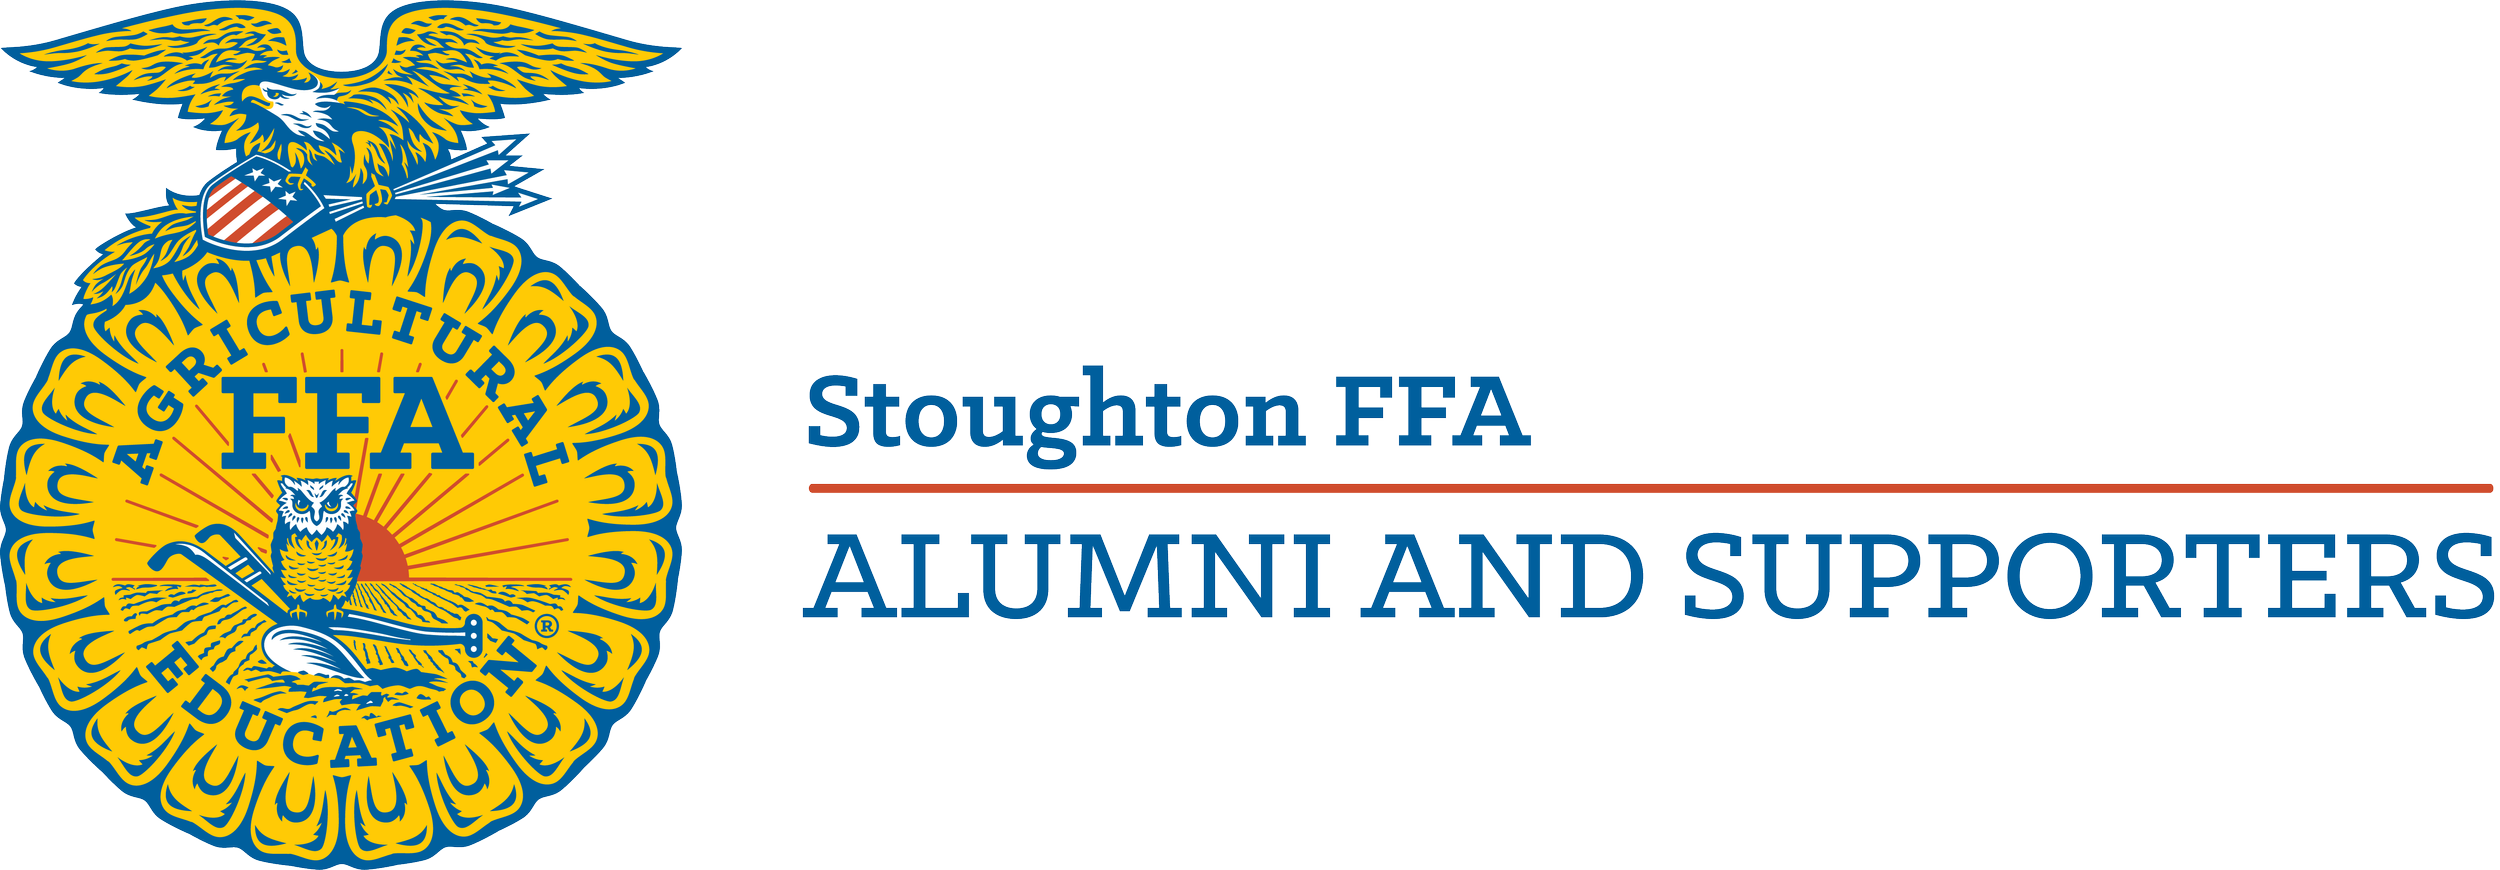 Stoughton FFA Alumni logo-2020.png